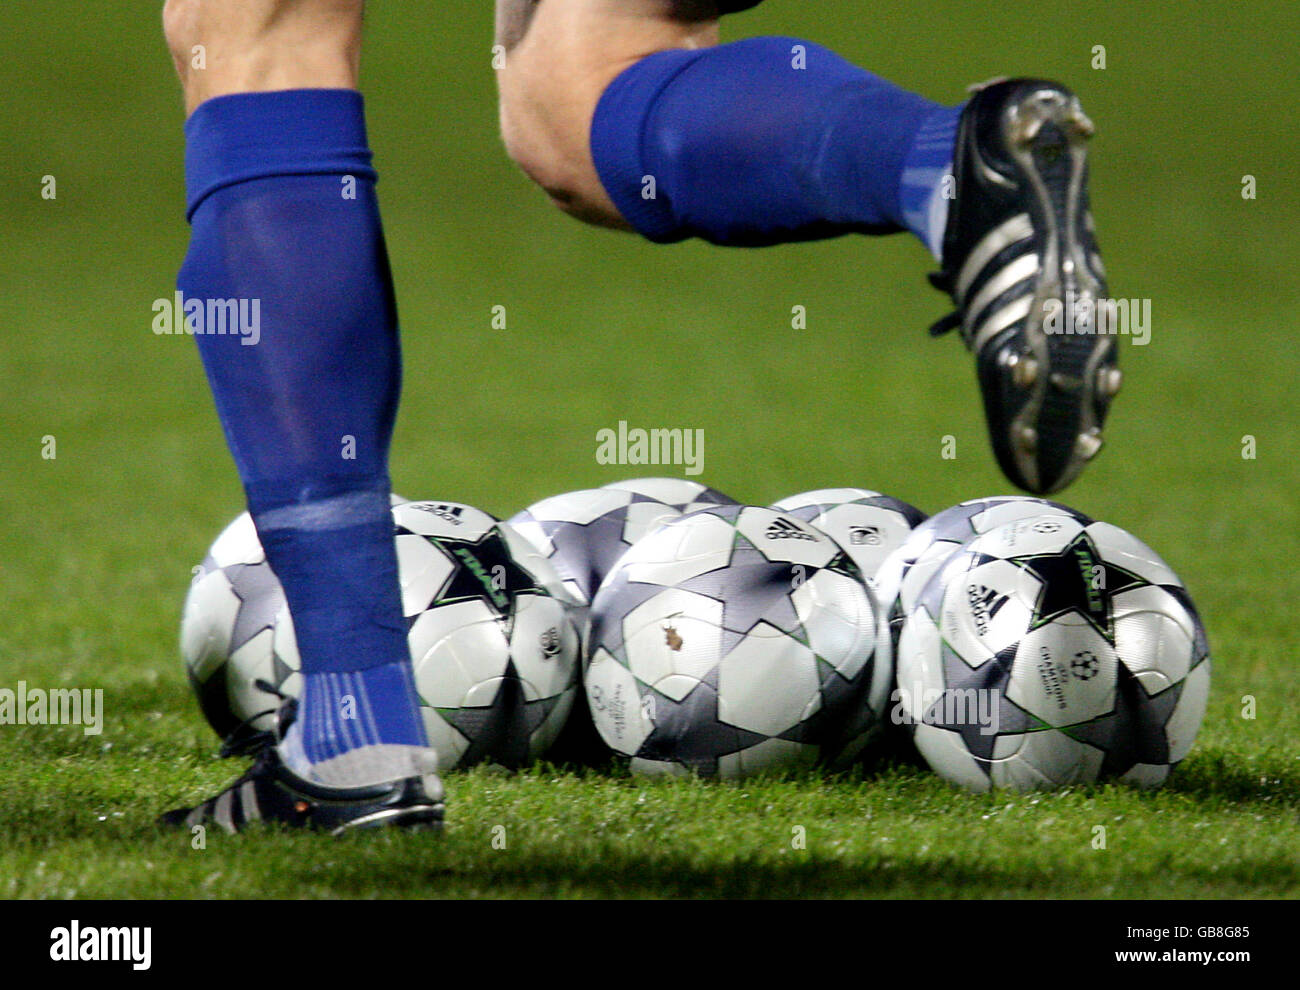 Steaua Bucuresti players warm up with UEFA Champions League match balls  Stock Photo - Alamy